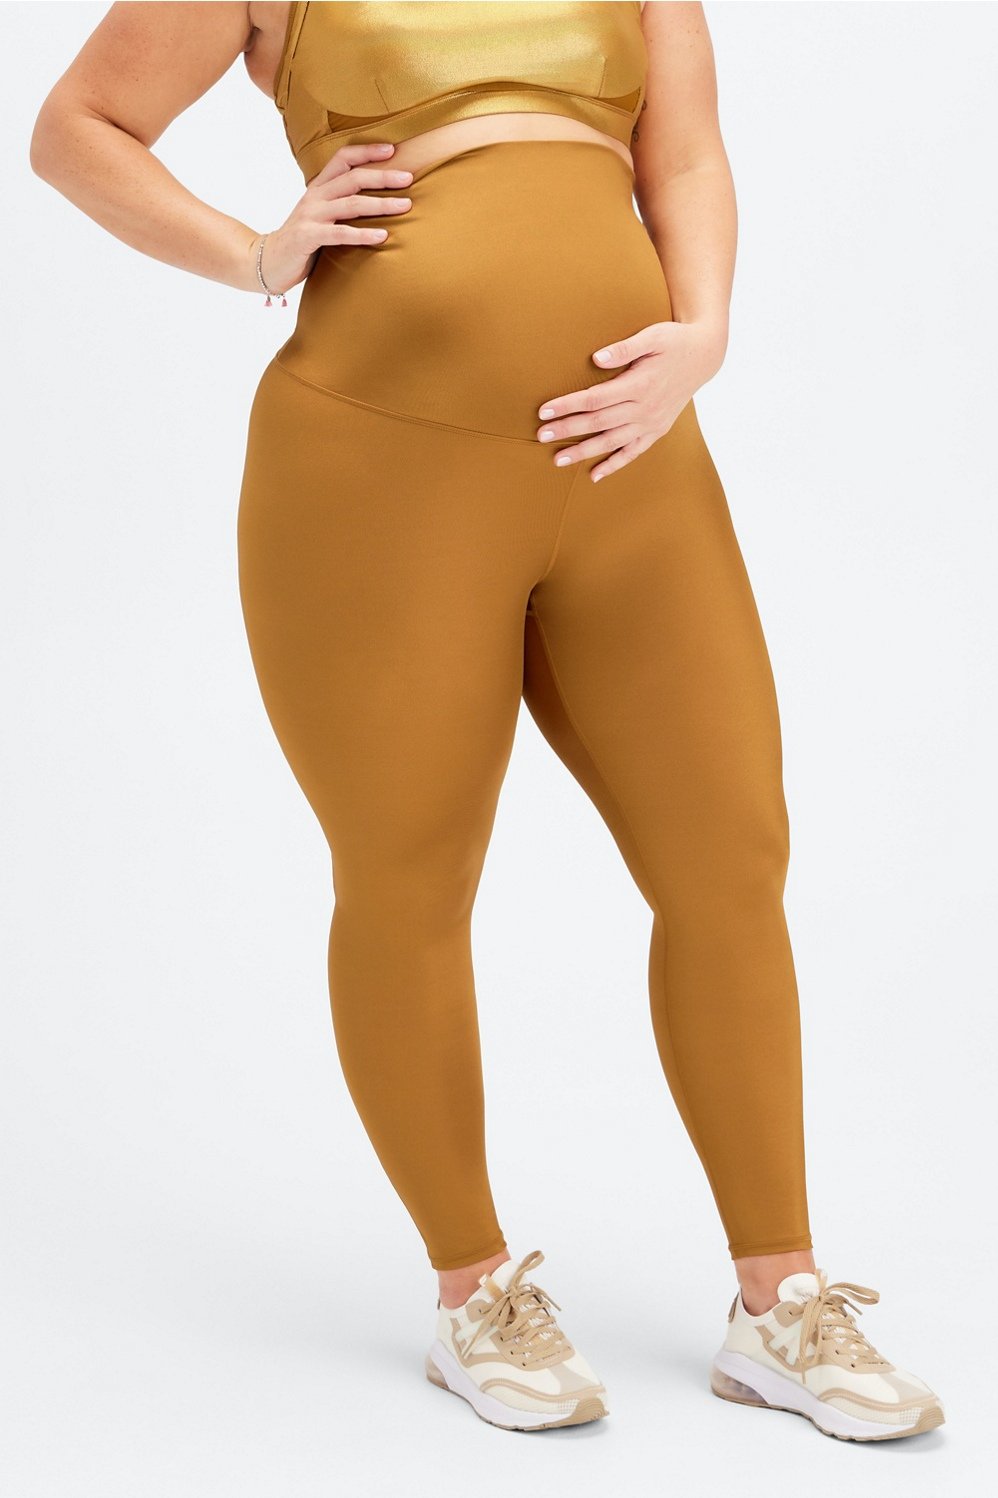 Fabletics pocket maternity leggings available Price 15000 Size medium  0754553666